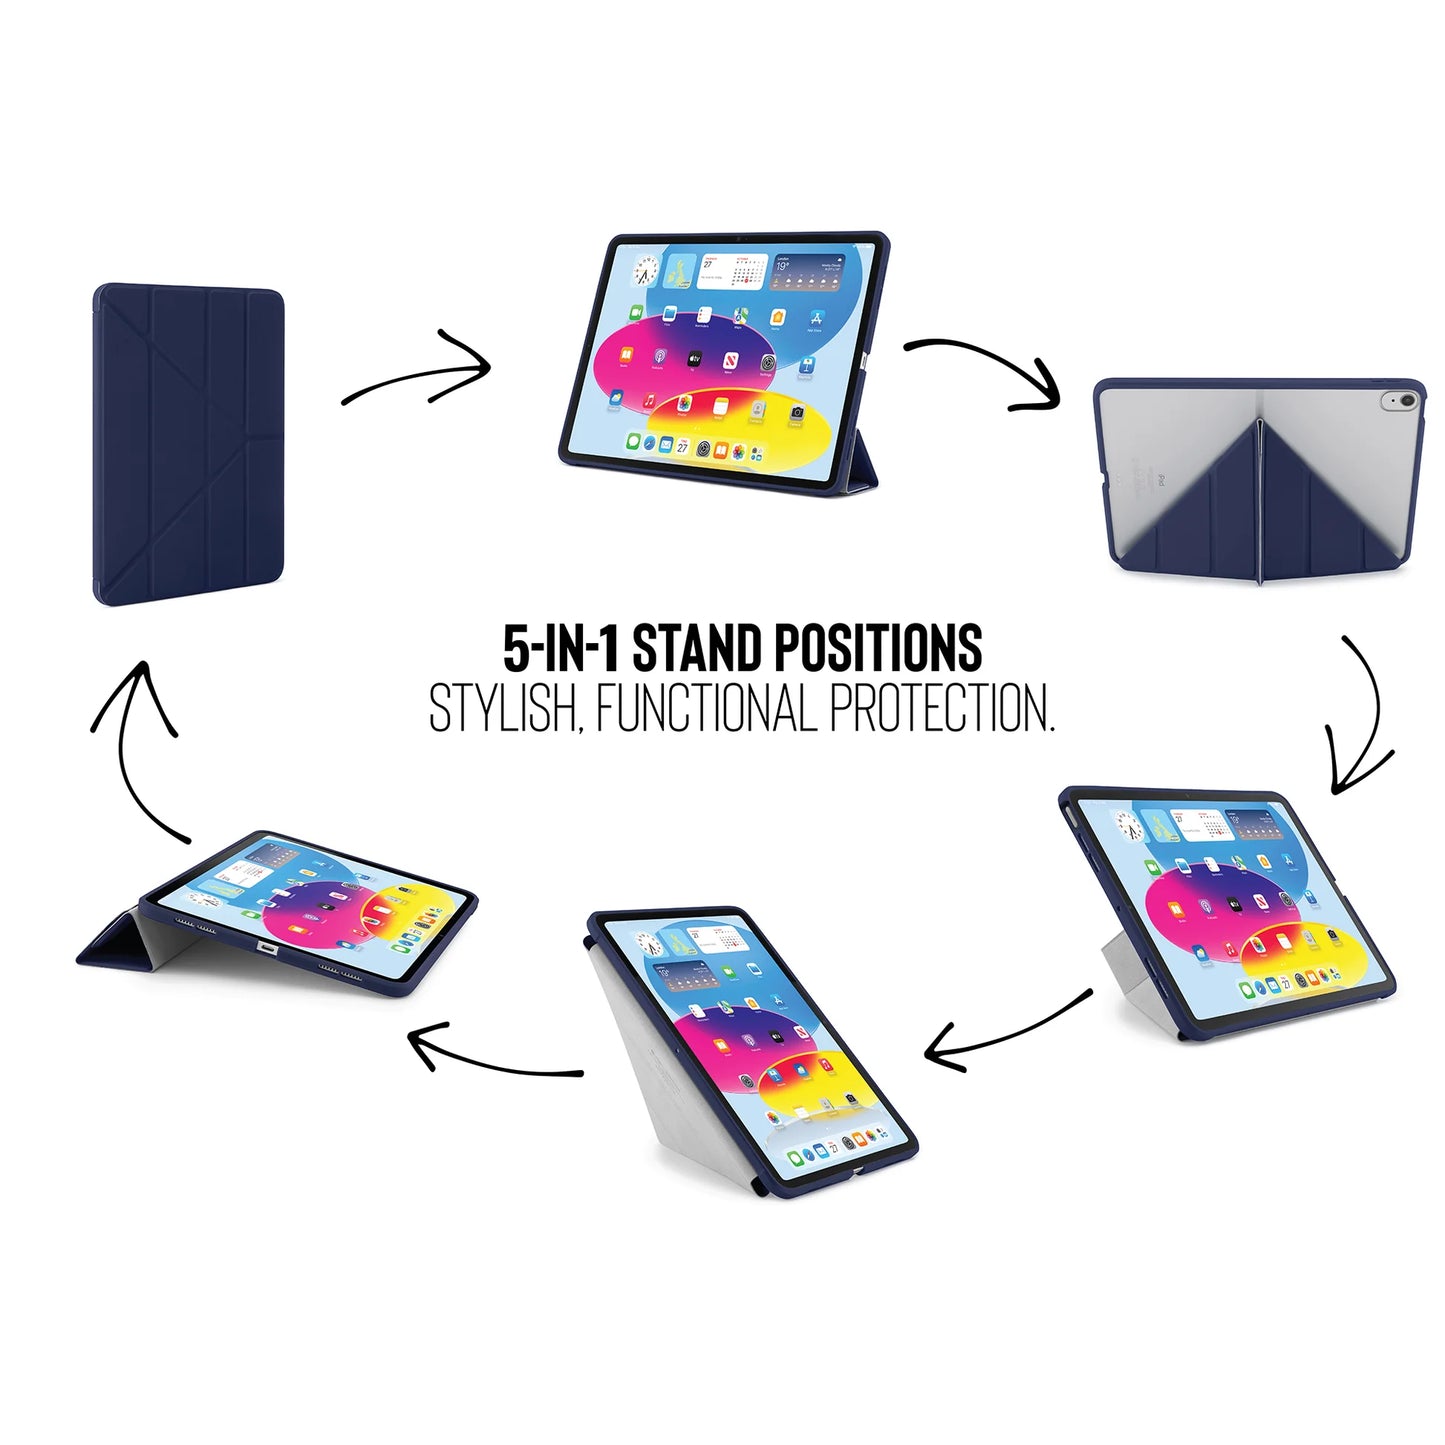 Pipetto Origami Case voor iPad (10e gen.) - Donkerblauw